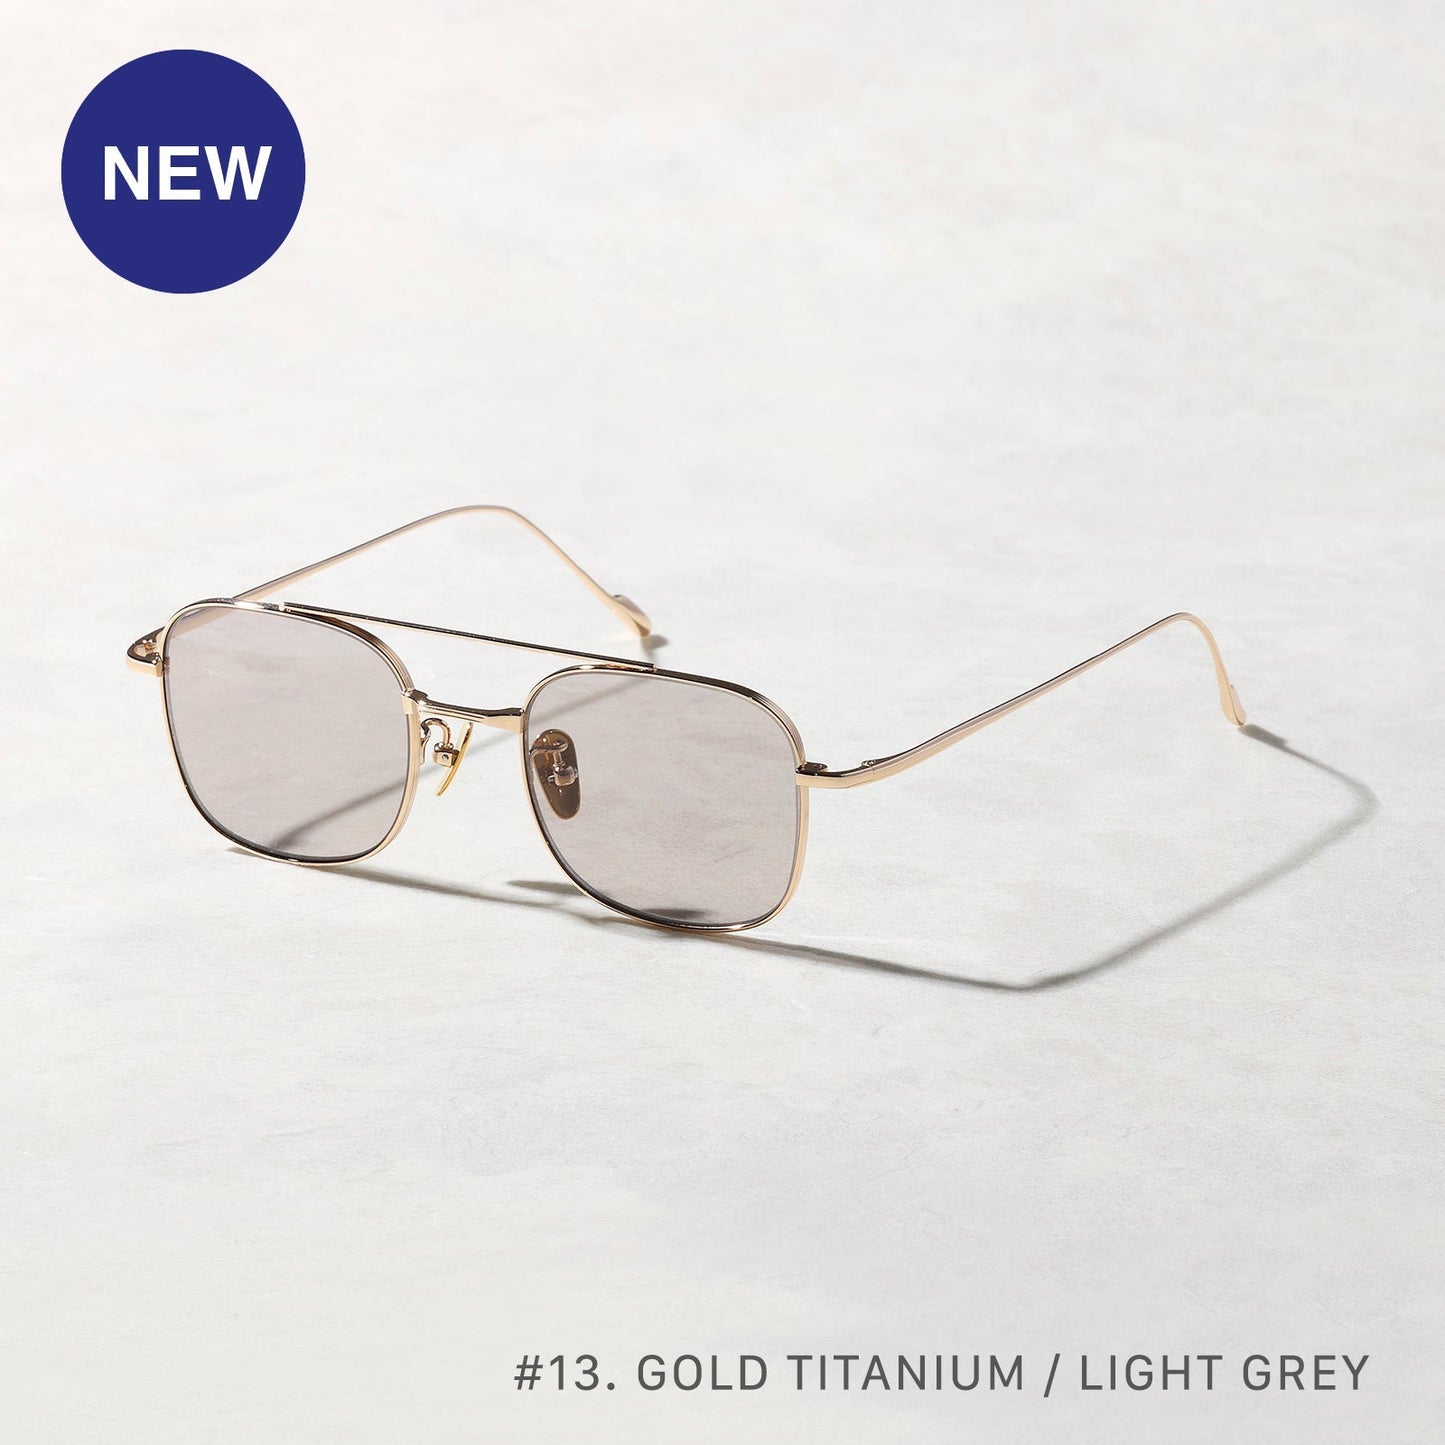 【5月下旬発売】#13　GOLD TITANIUM / LIGHT GREEN (3310)